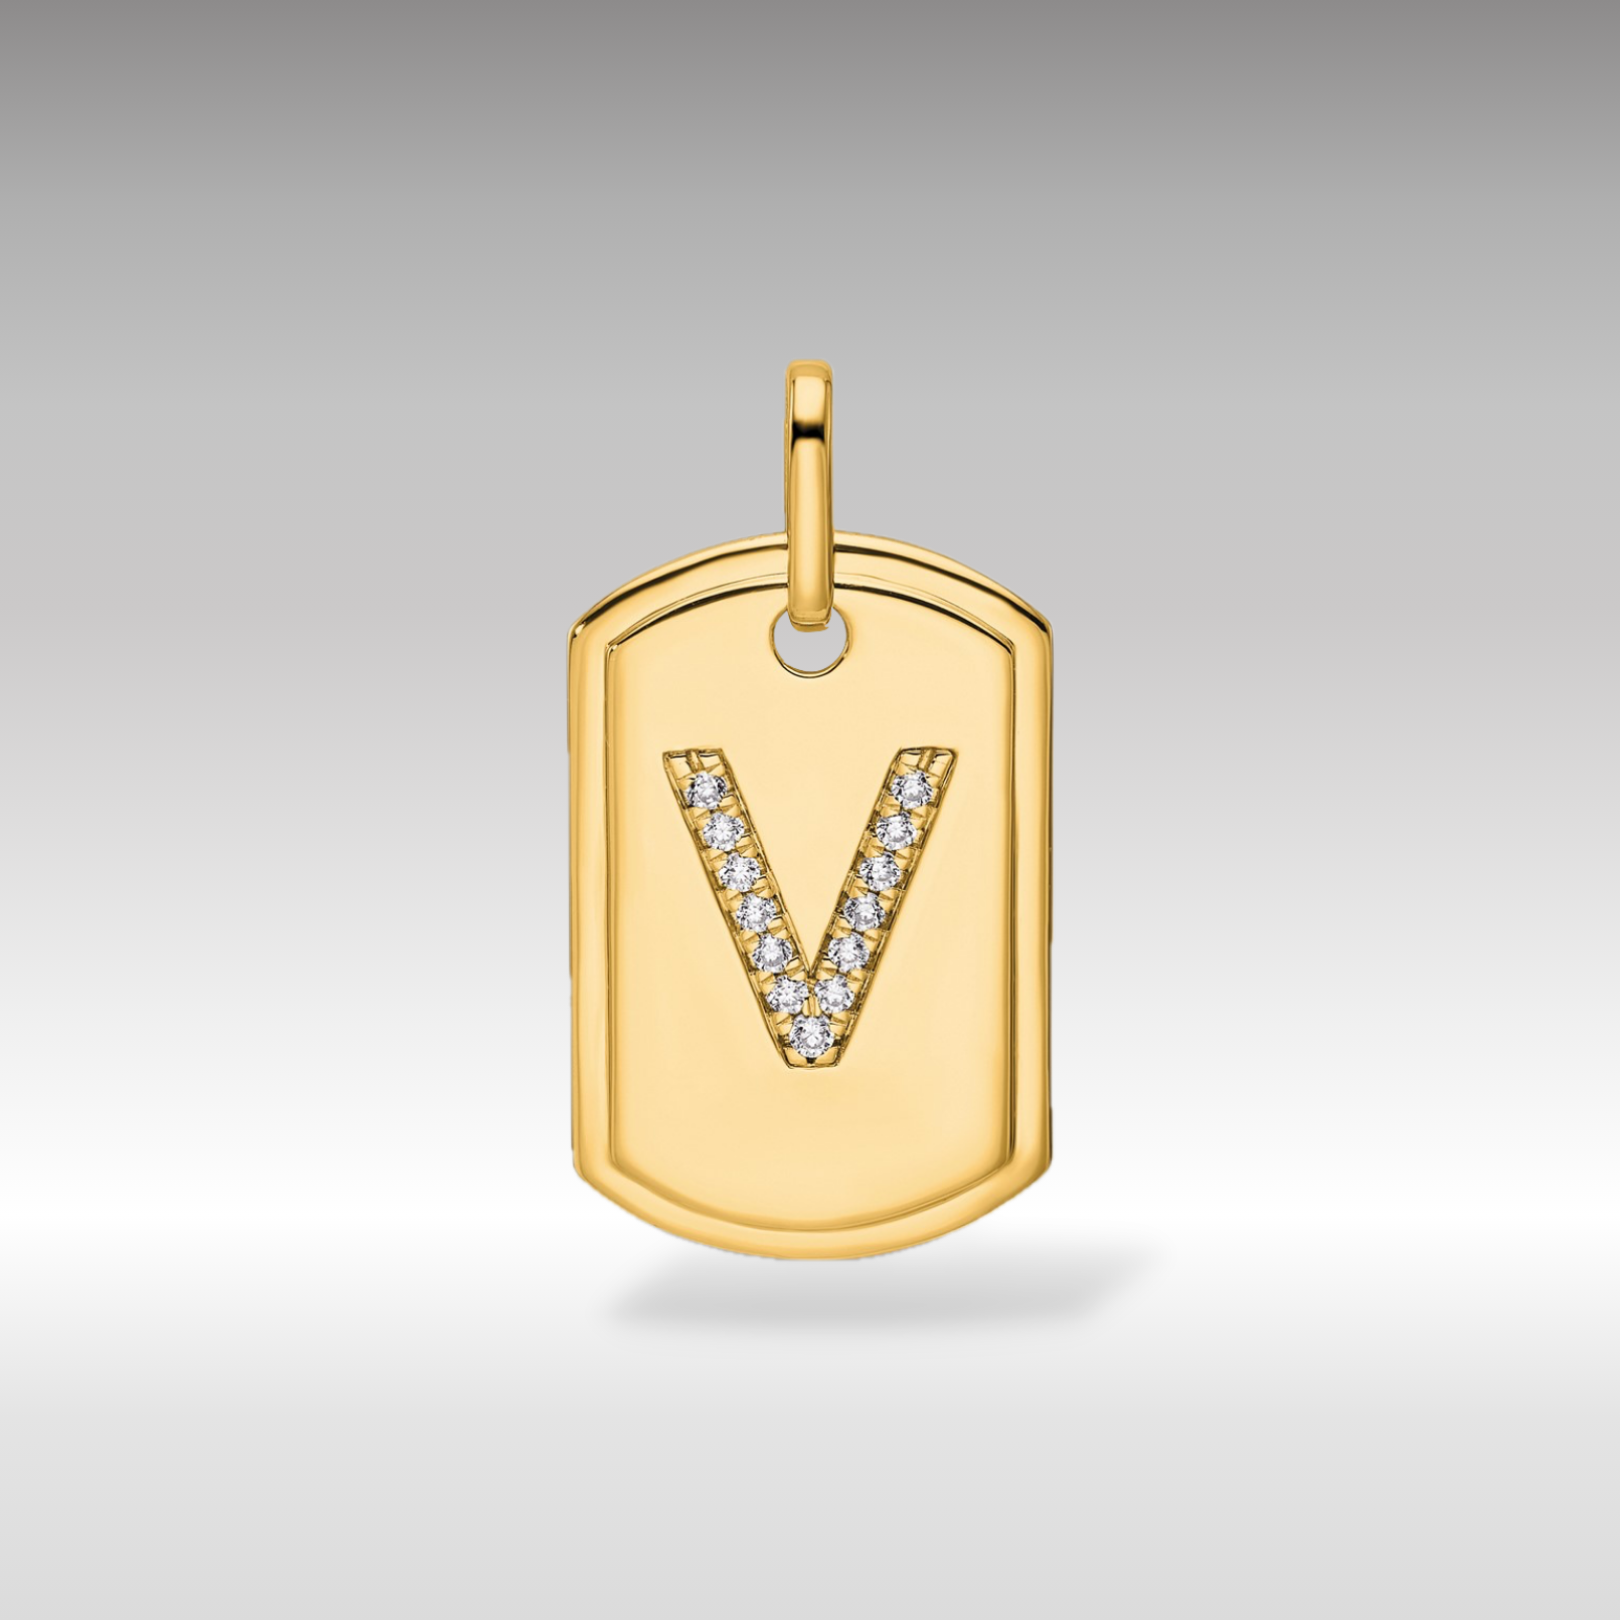 14K Gold Initial "V" Dog Tag With Genuine Diamonds - Charlie & Co. Jewelry